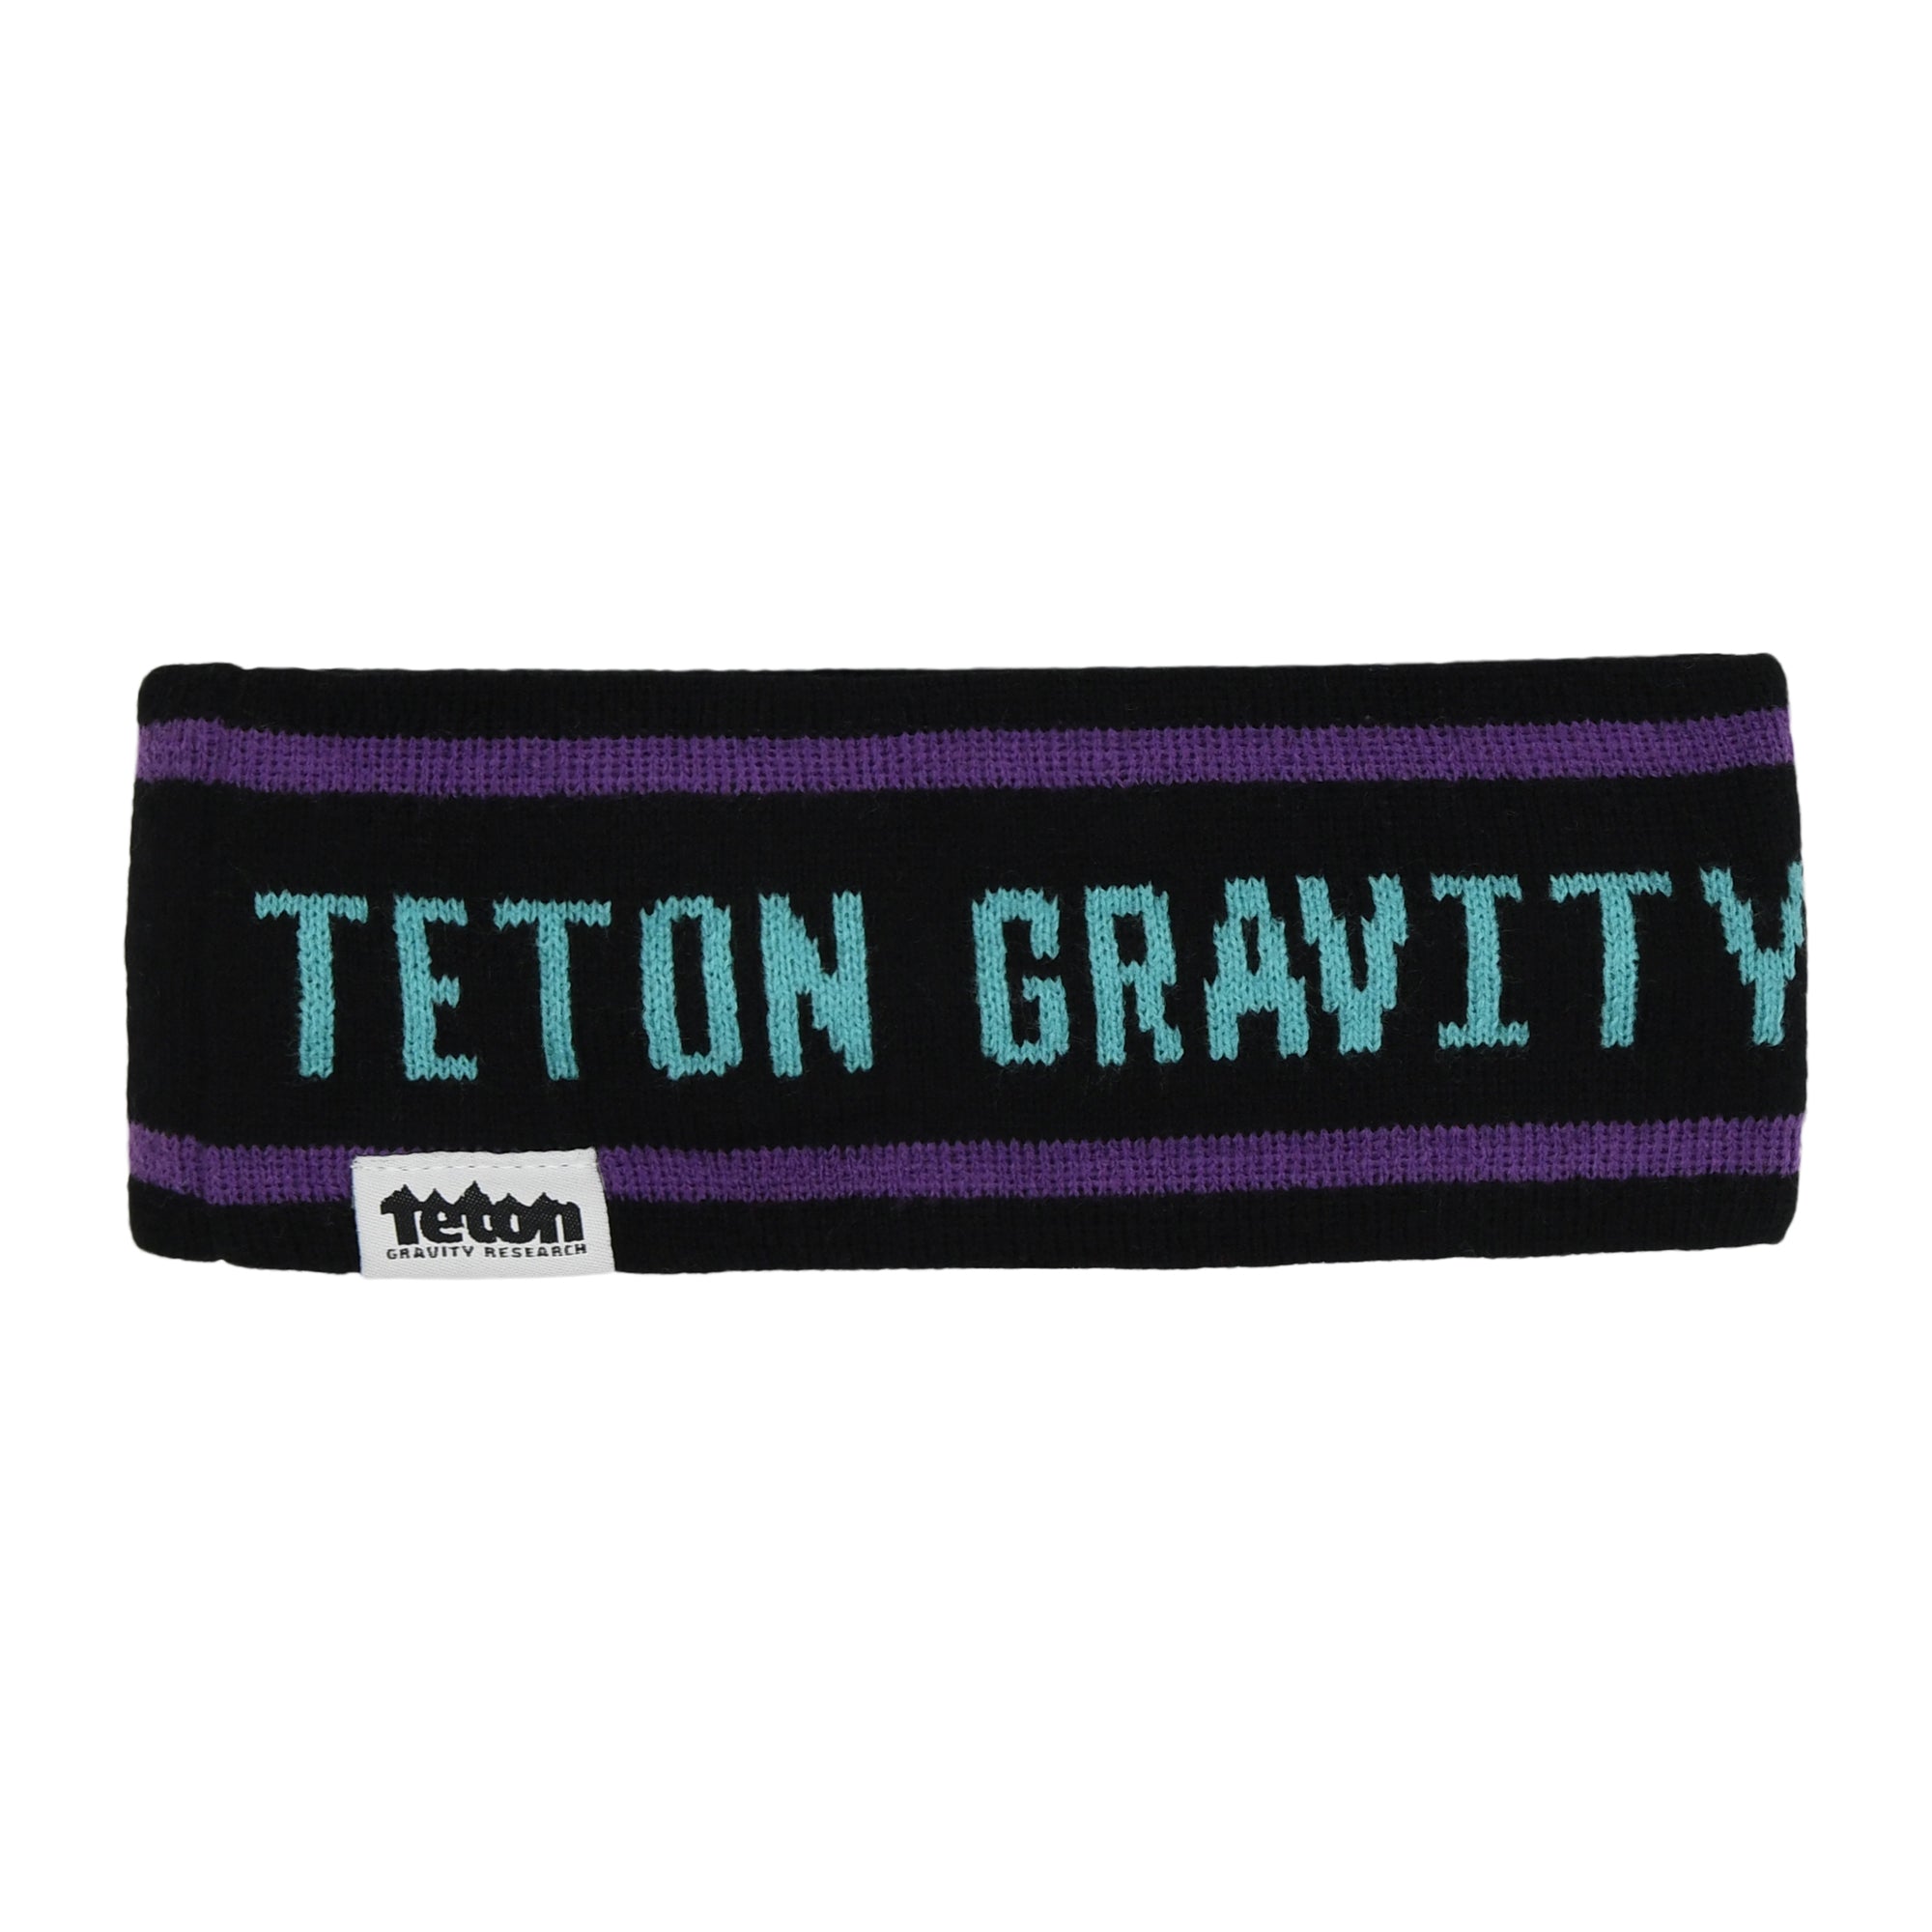 Coombs Retro Headband - Teton Gravity Research